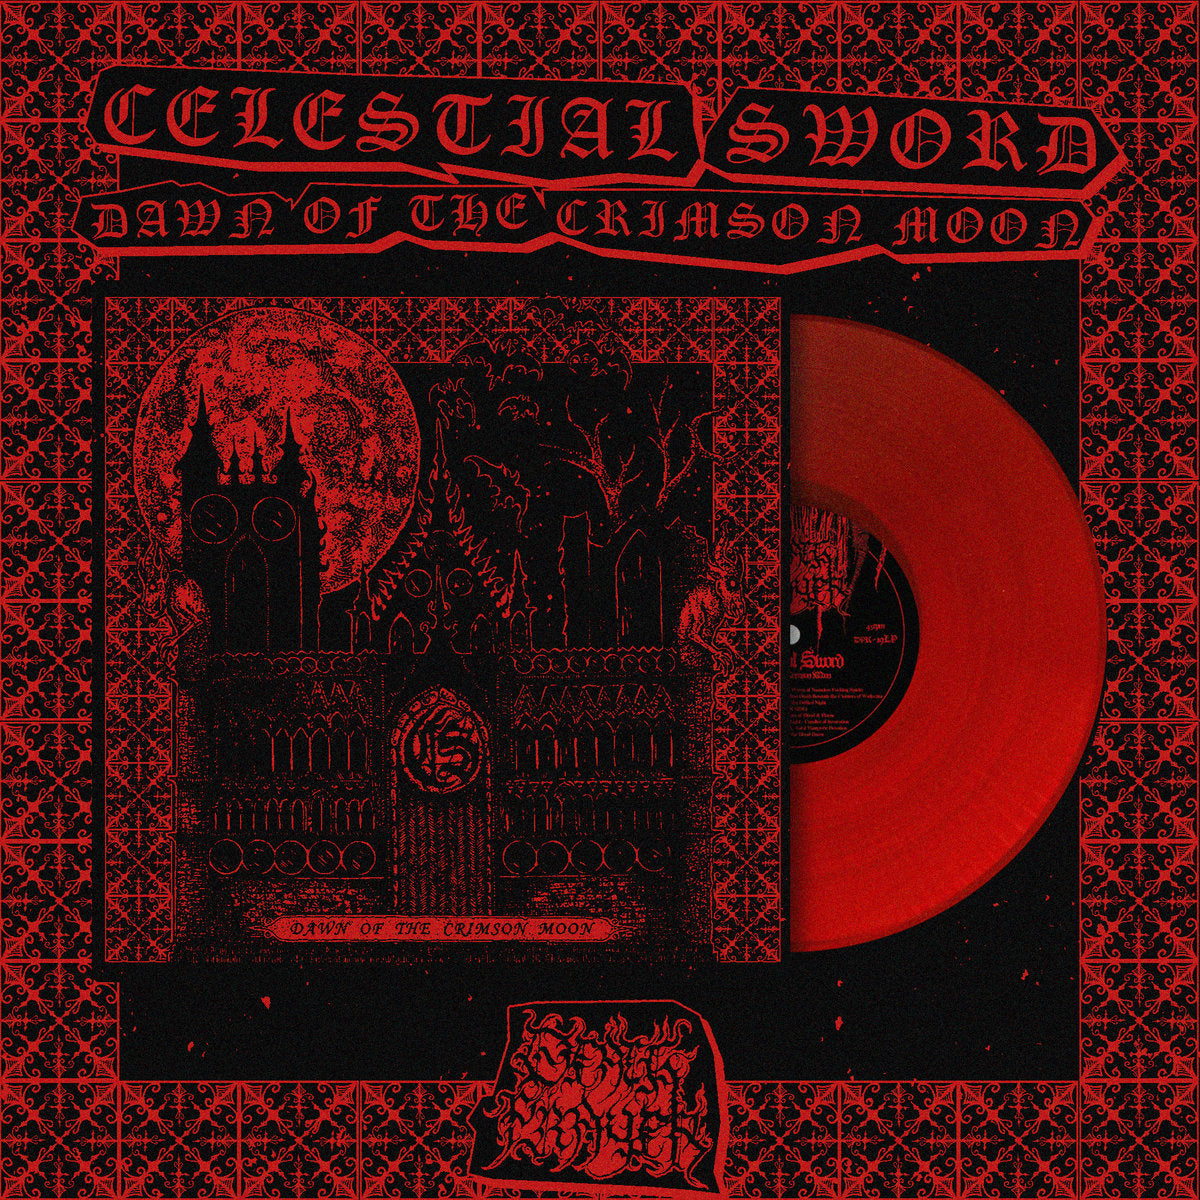 [SOLD OUT] CELESTIAL SWORD "Dawn of the Crimson Moon" vinyl LP (color)